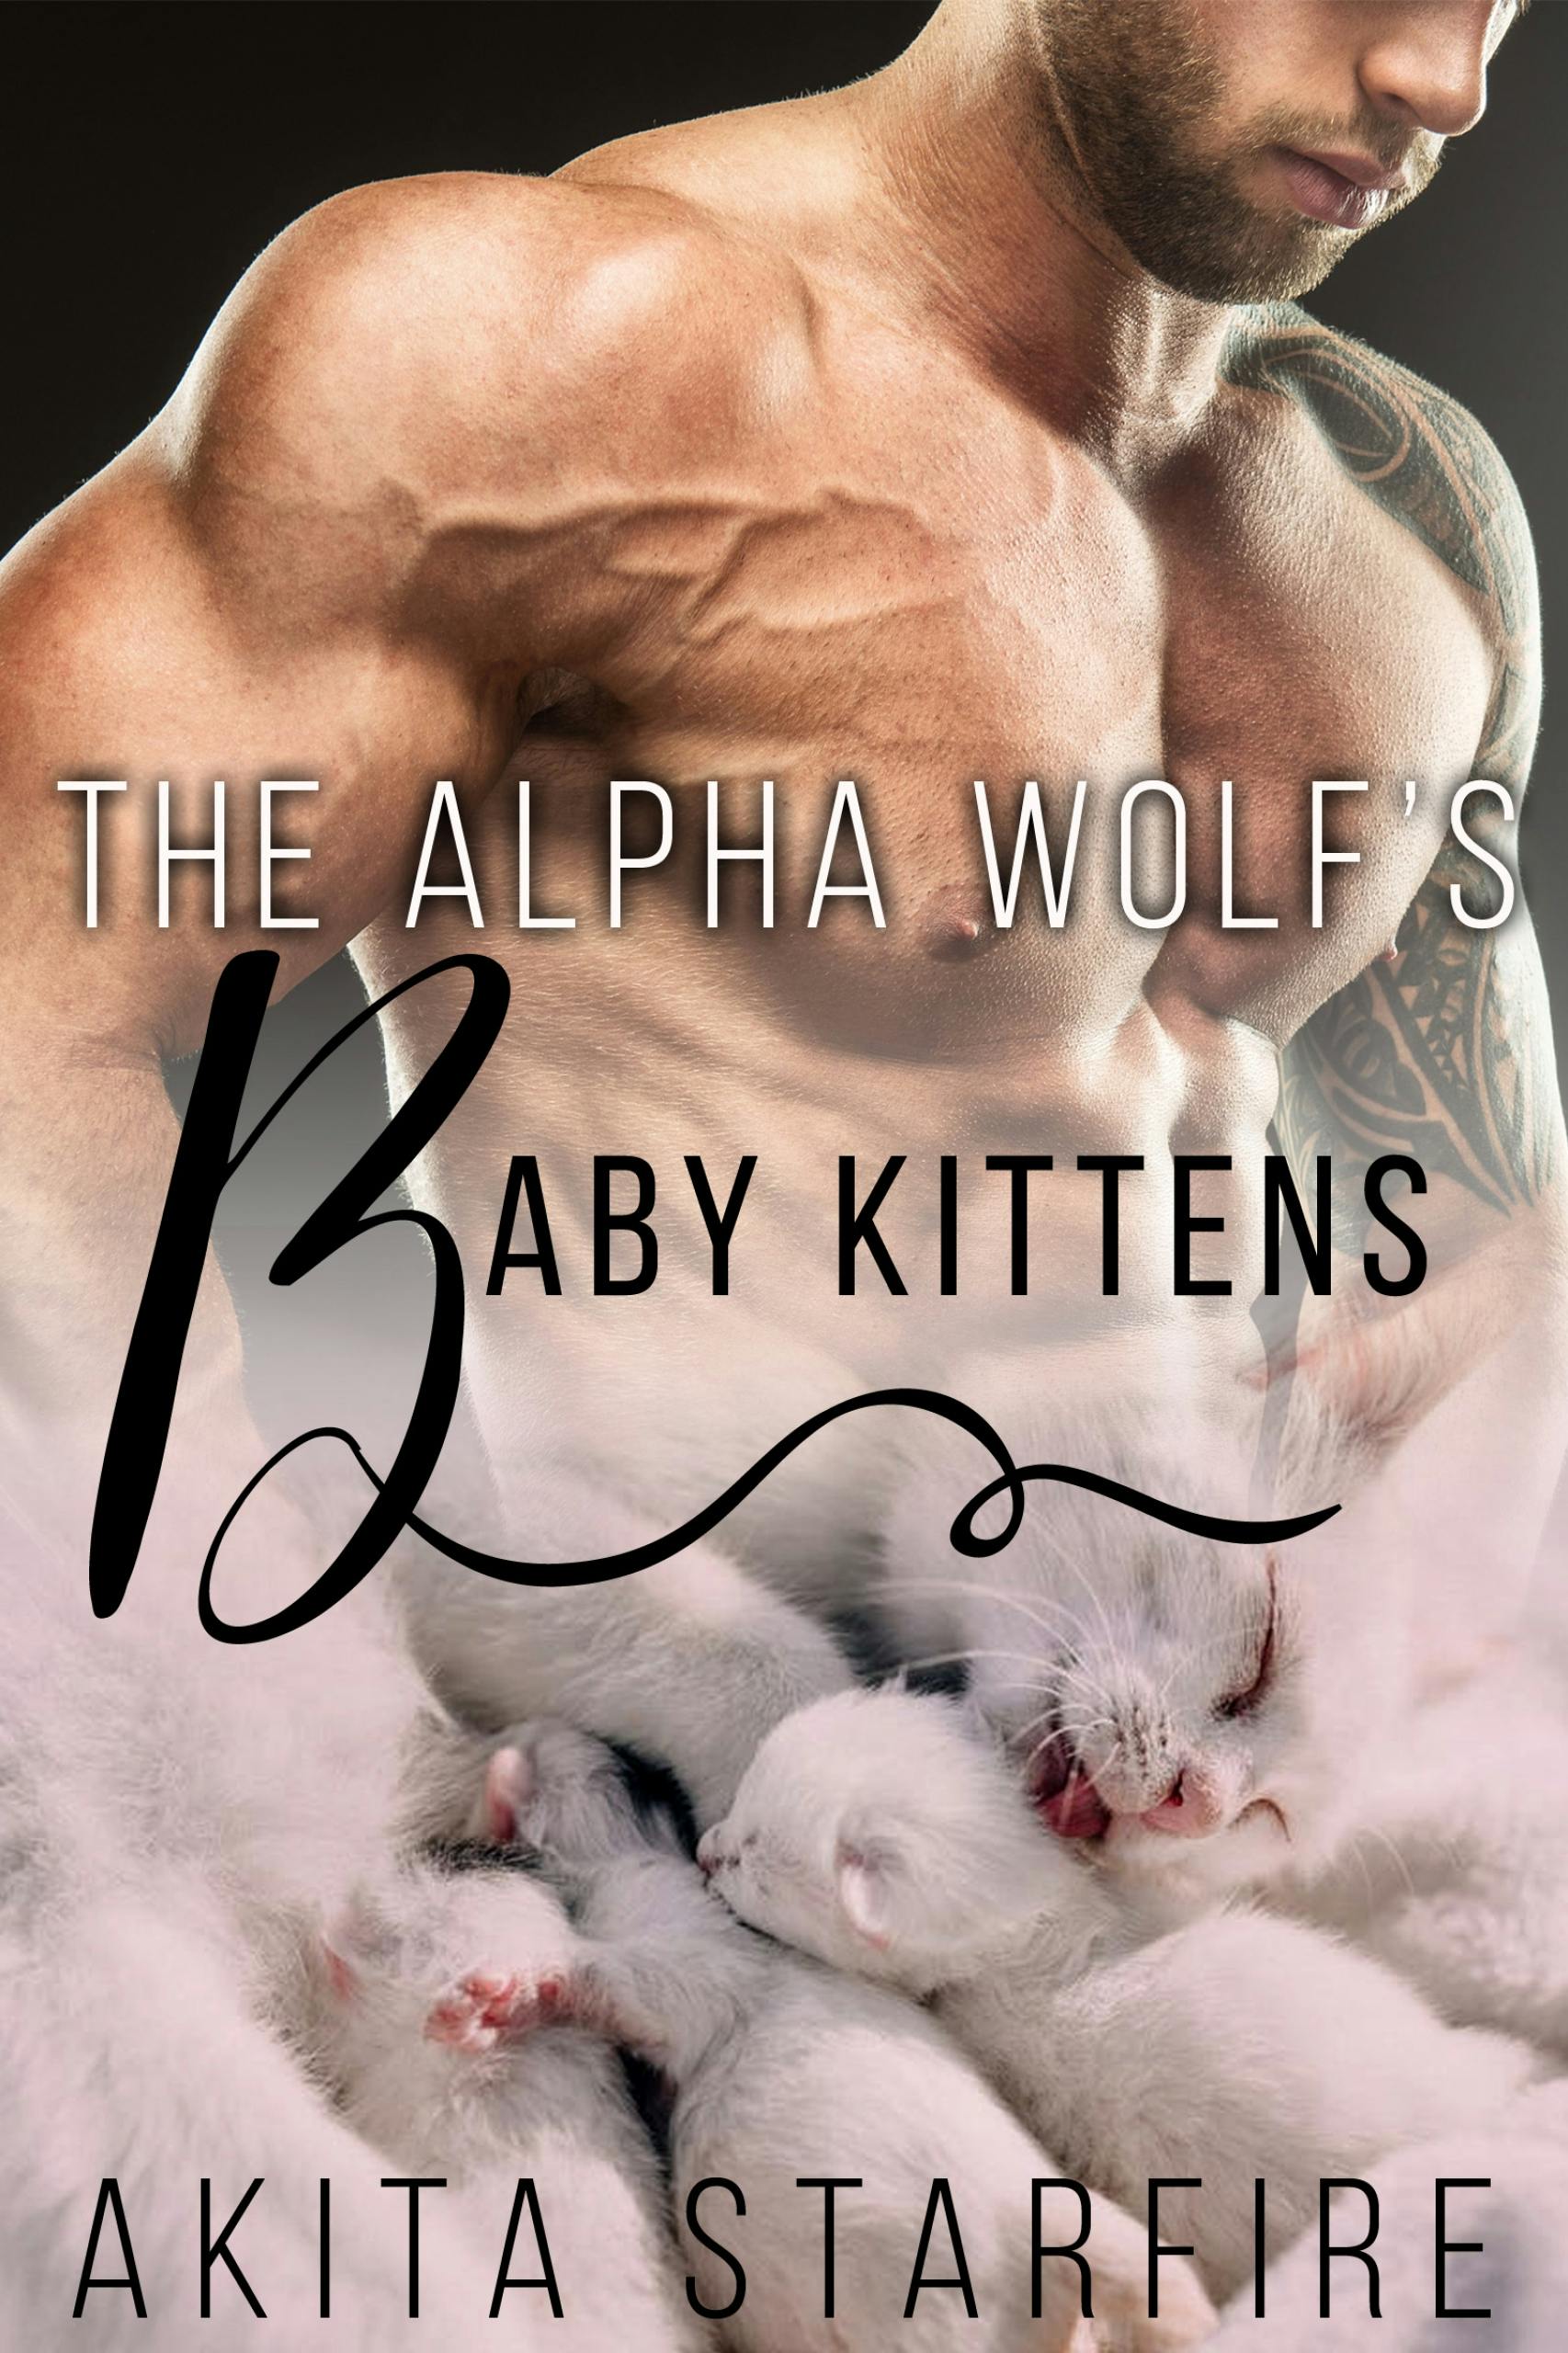 The Alpha Wolf's Baby Kittens - Akita StarFire